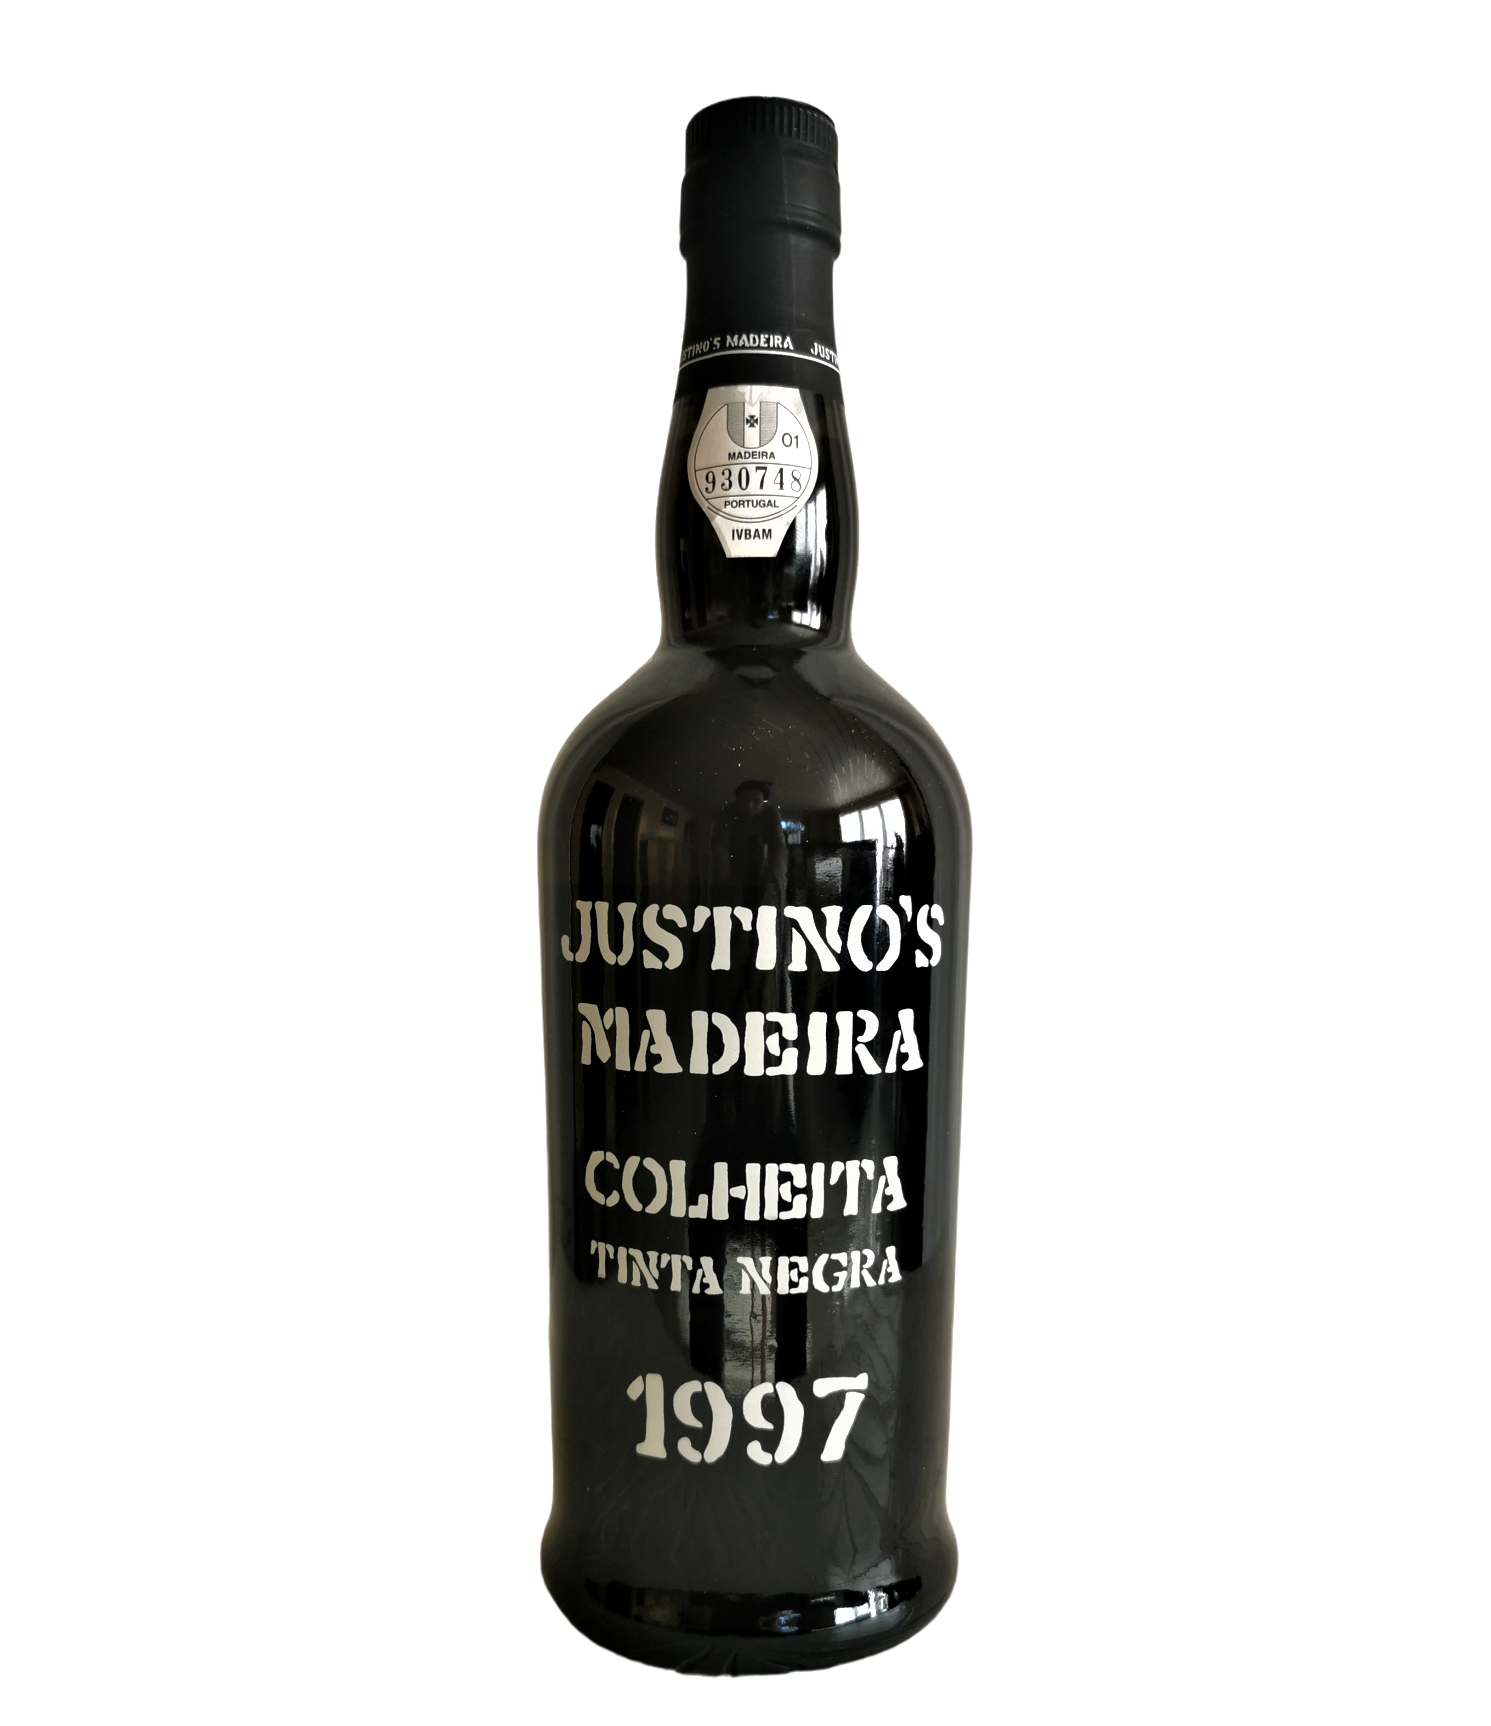 Justino's Madeira Colheita 1997 Tinta Negra sweet 19% 75cl